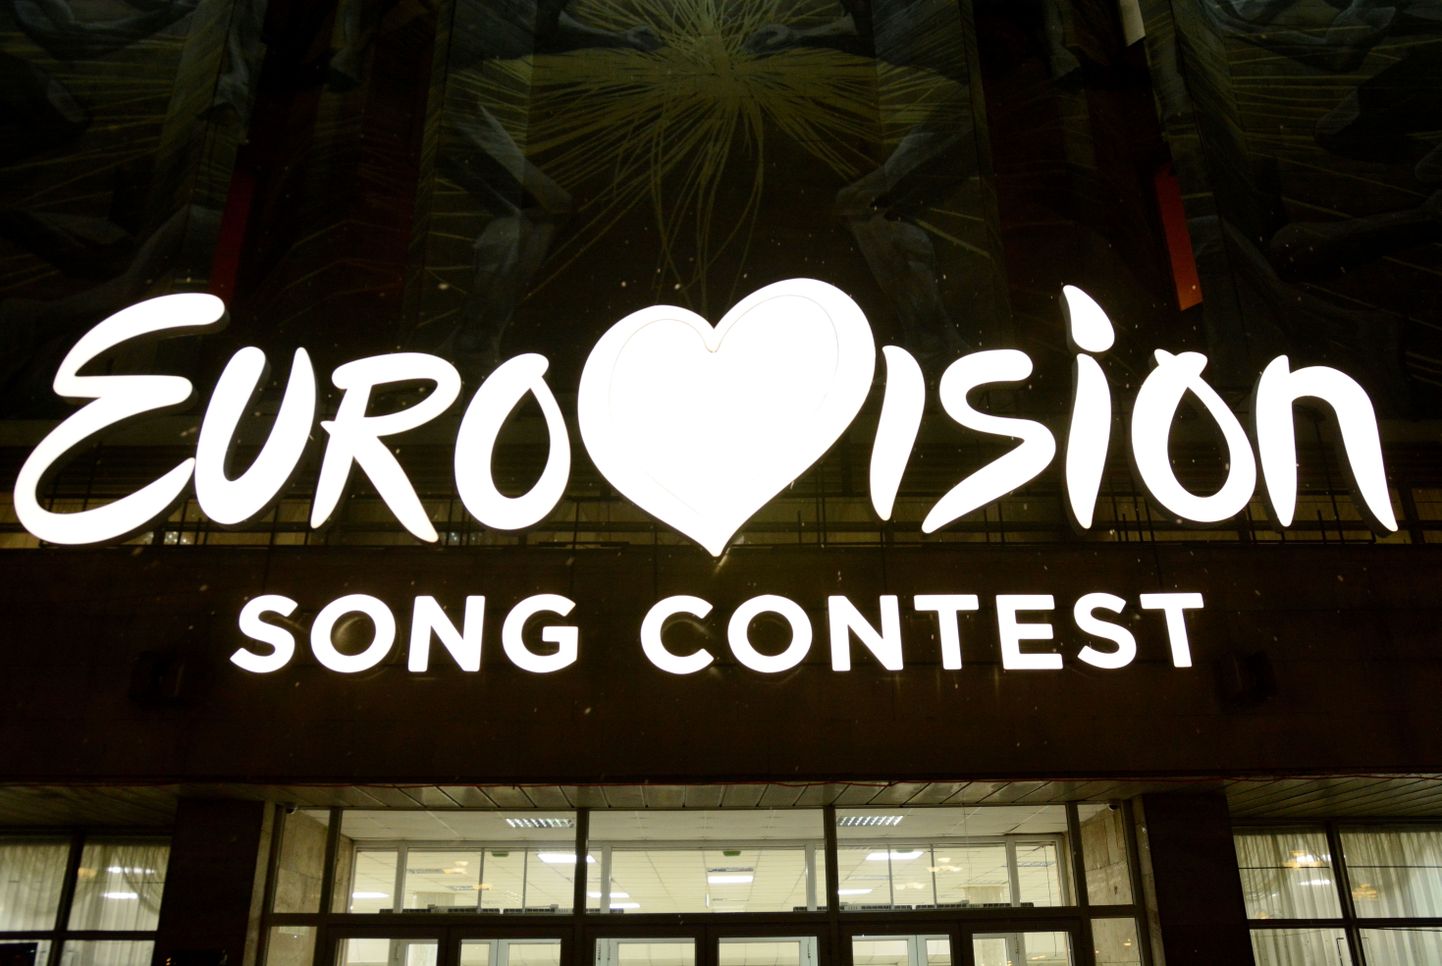 Eurovisioon